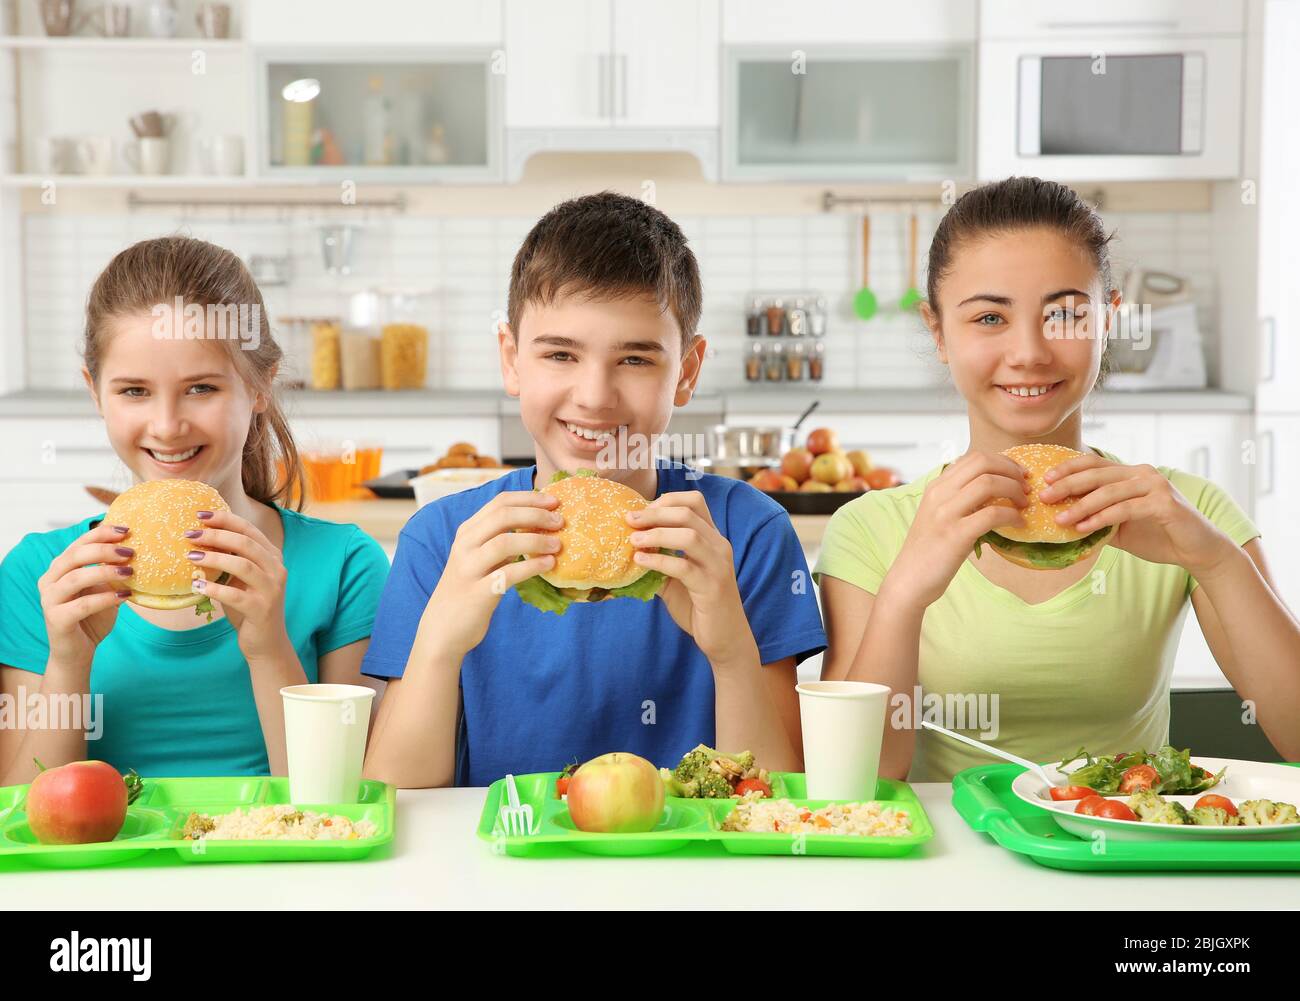 https://c8.alamy.com/comp/2BJGXPK/children-eating-delicious-sandwiches-in-school-canteen-2BJGXPK.jpg